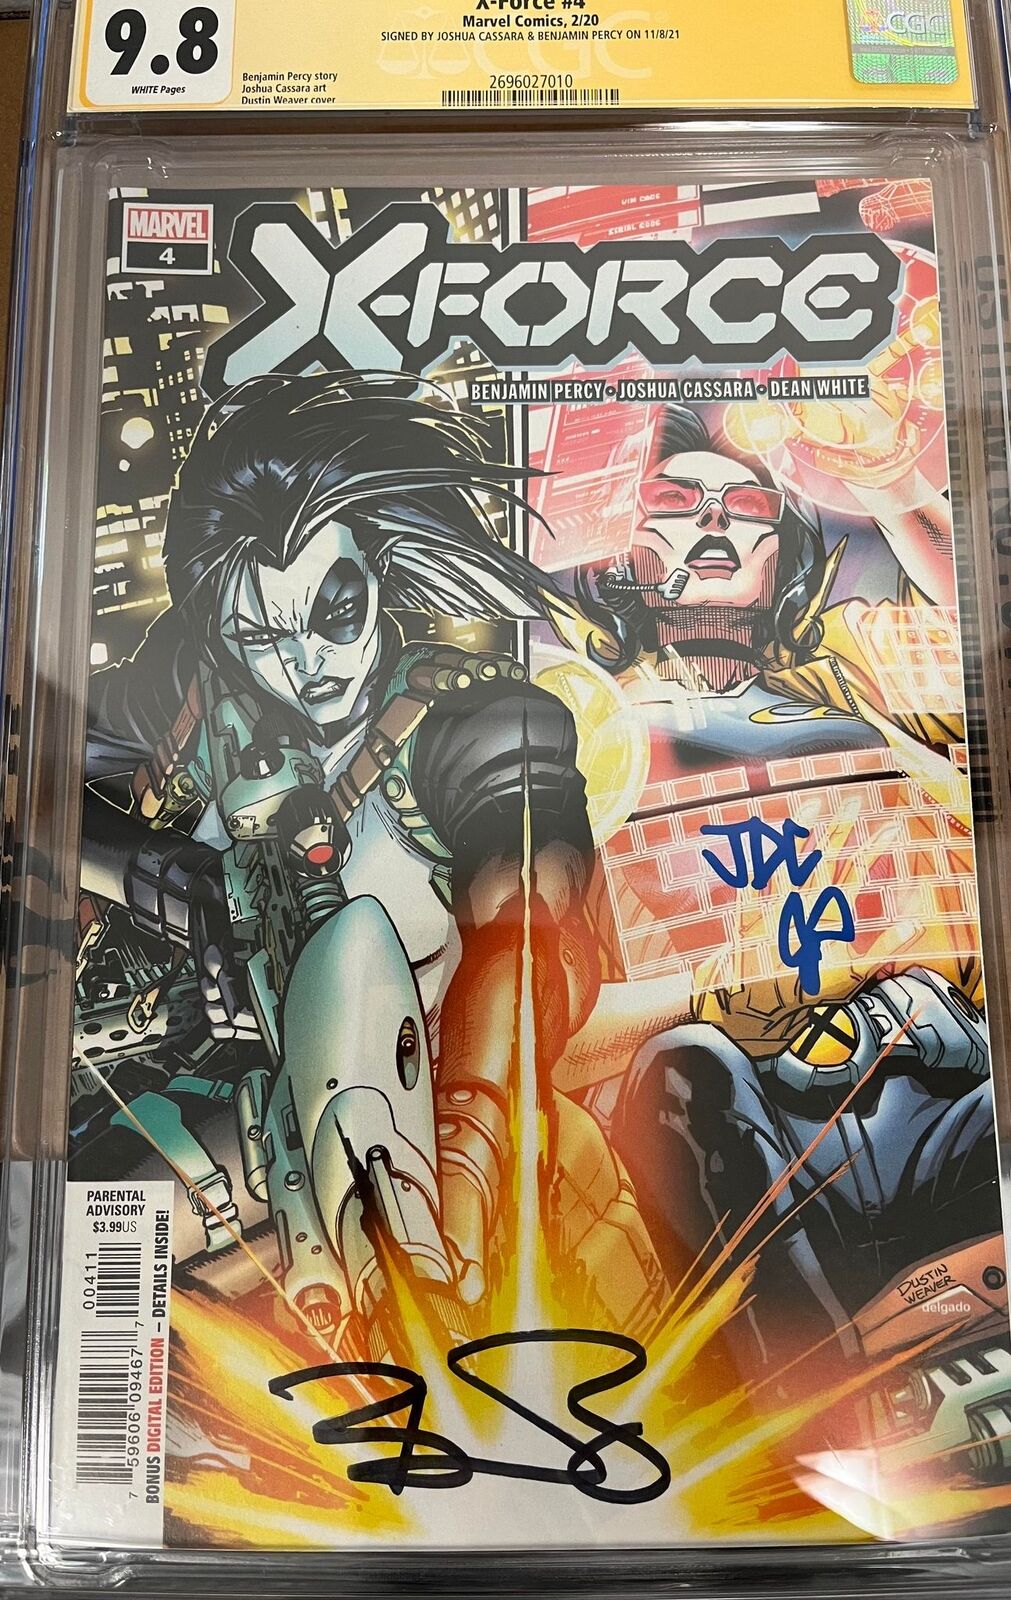 CGC 9.8 Signature Series X-Force #4 Signed by Joshua Cassara & Benjamin Percy